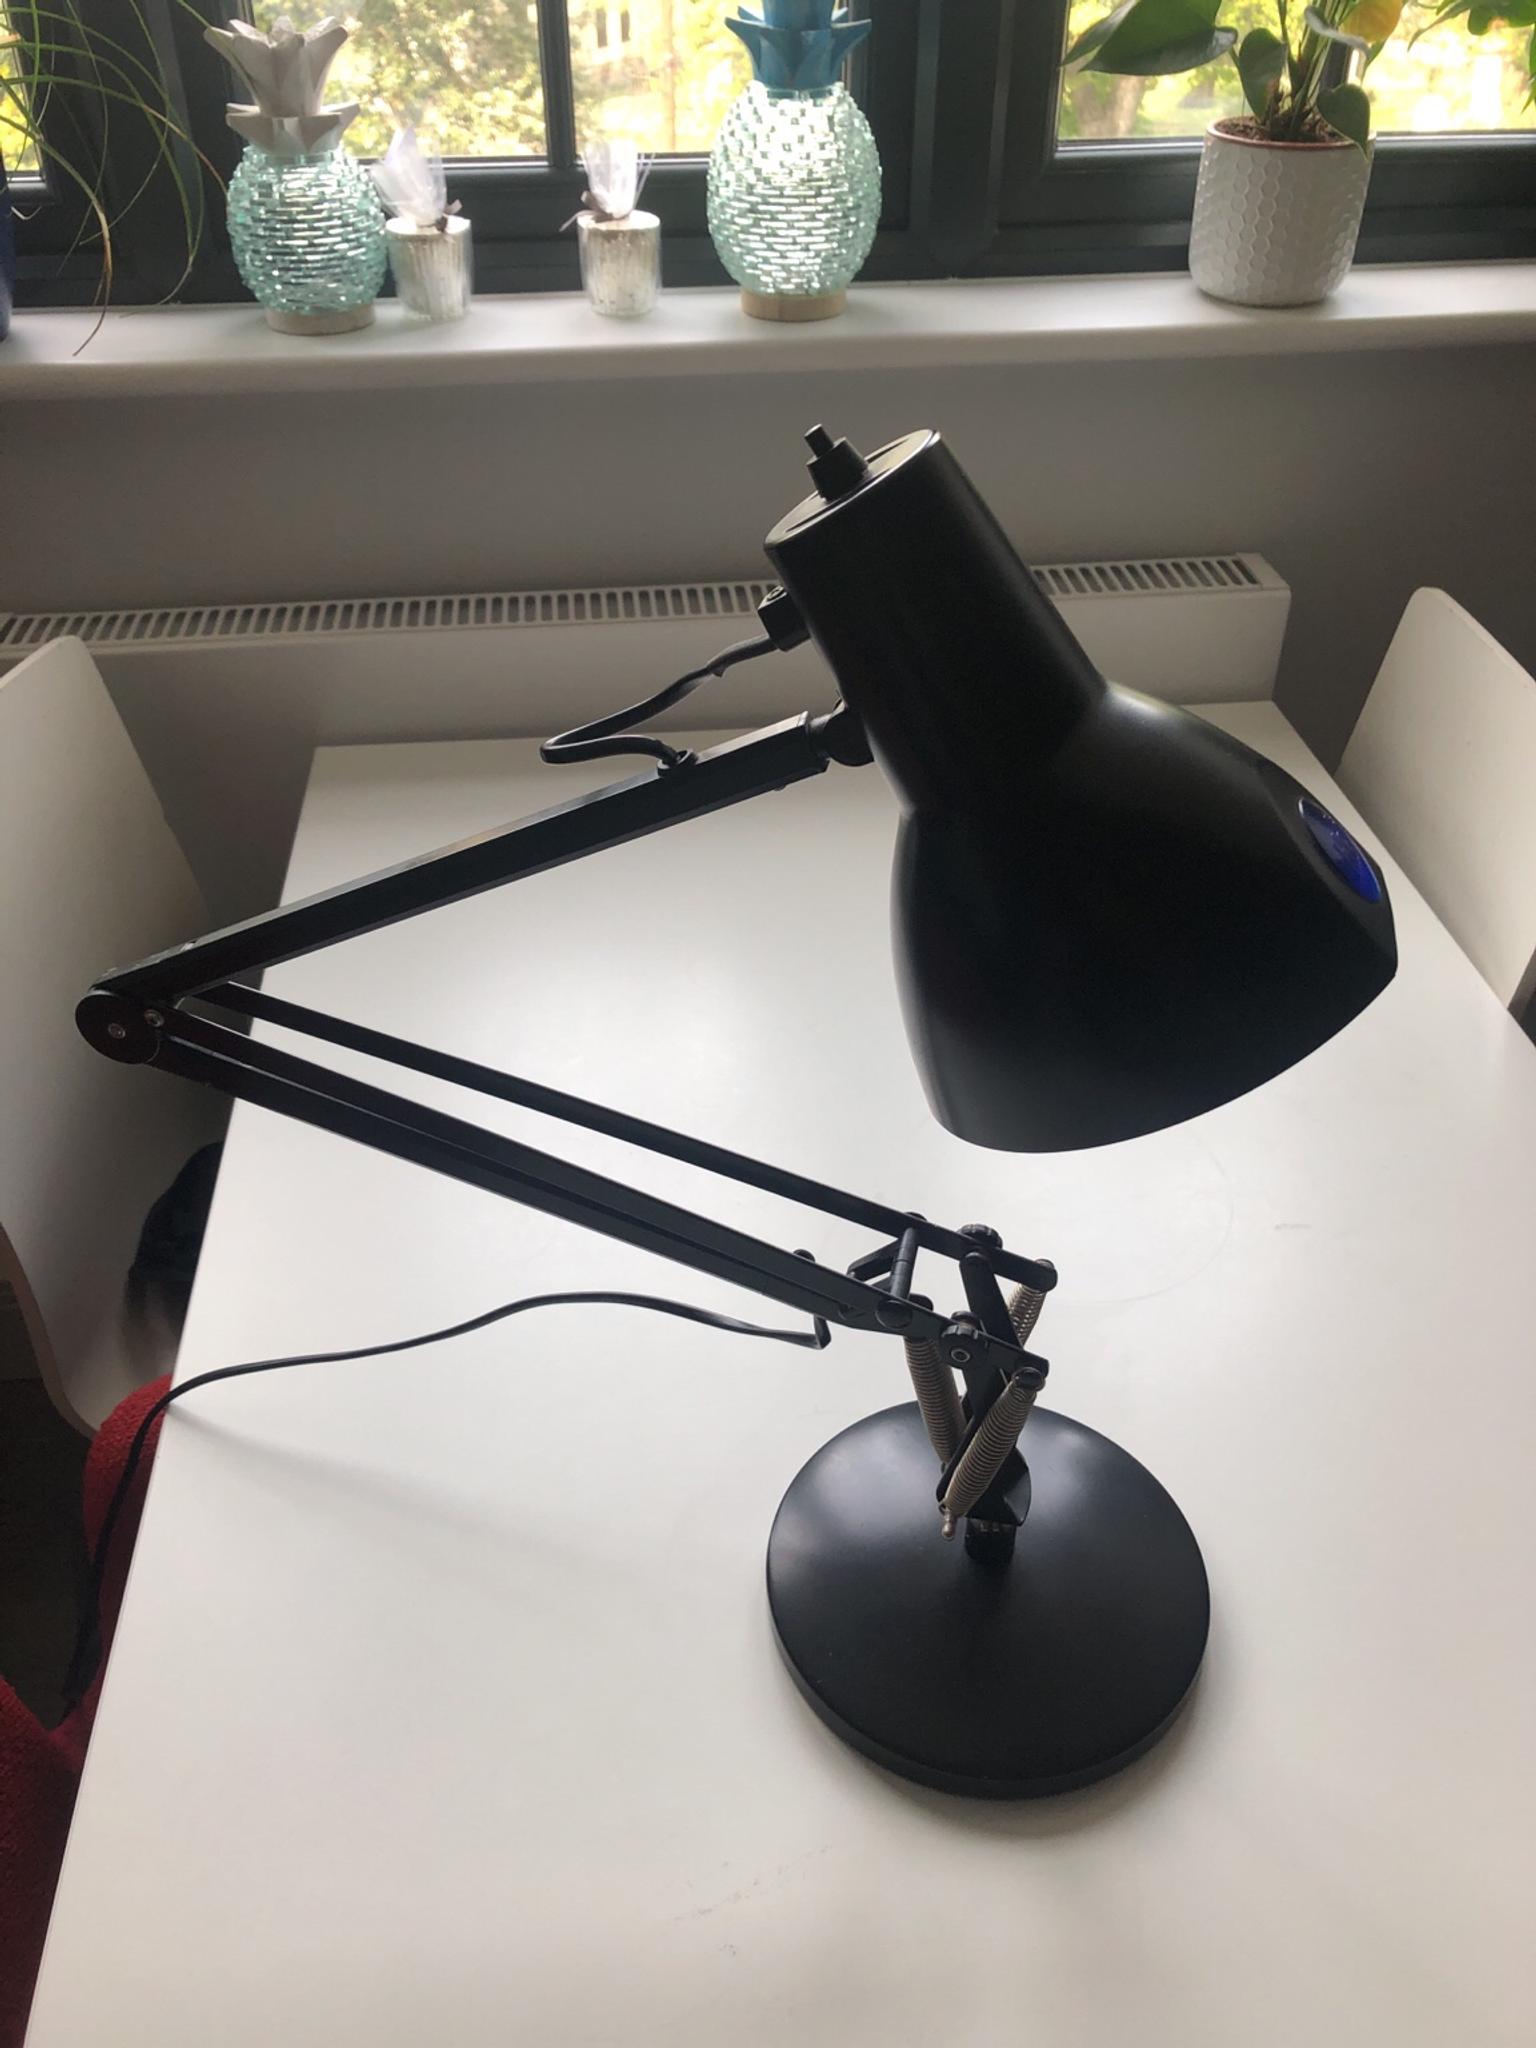 helix desk lamp